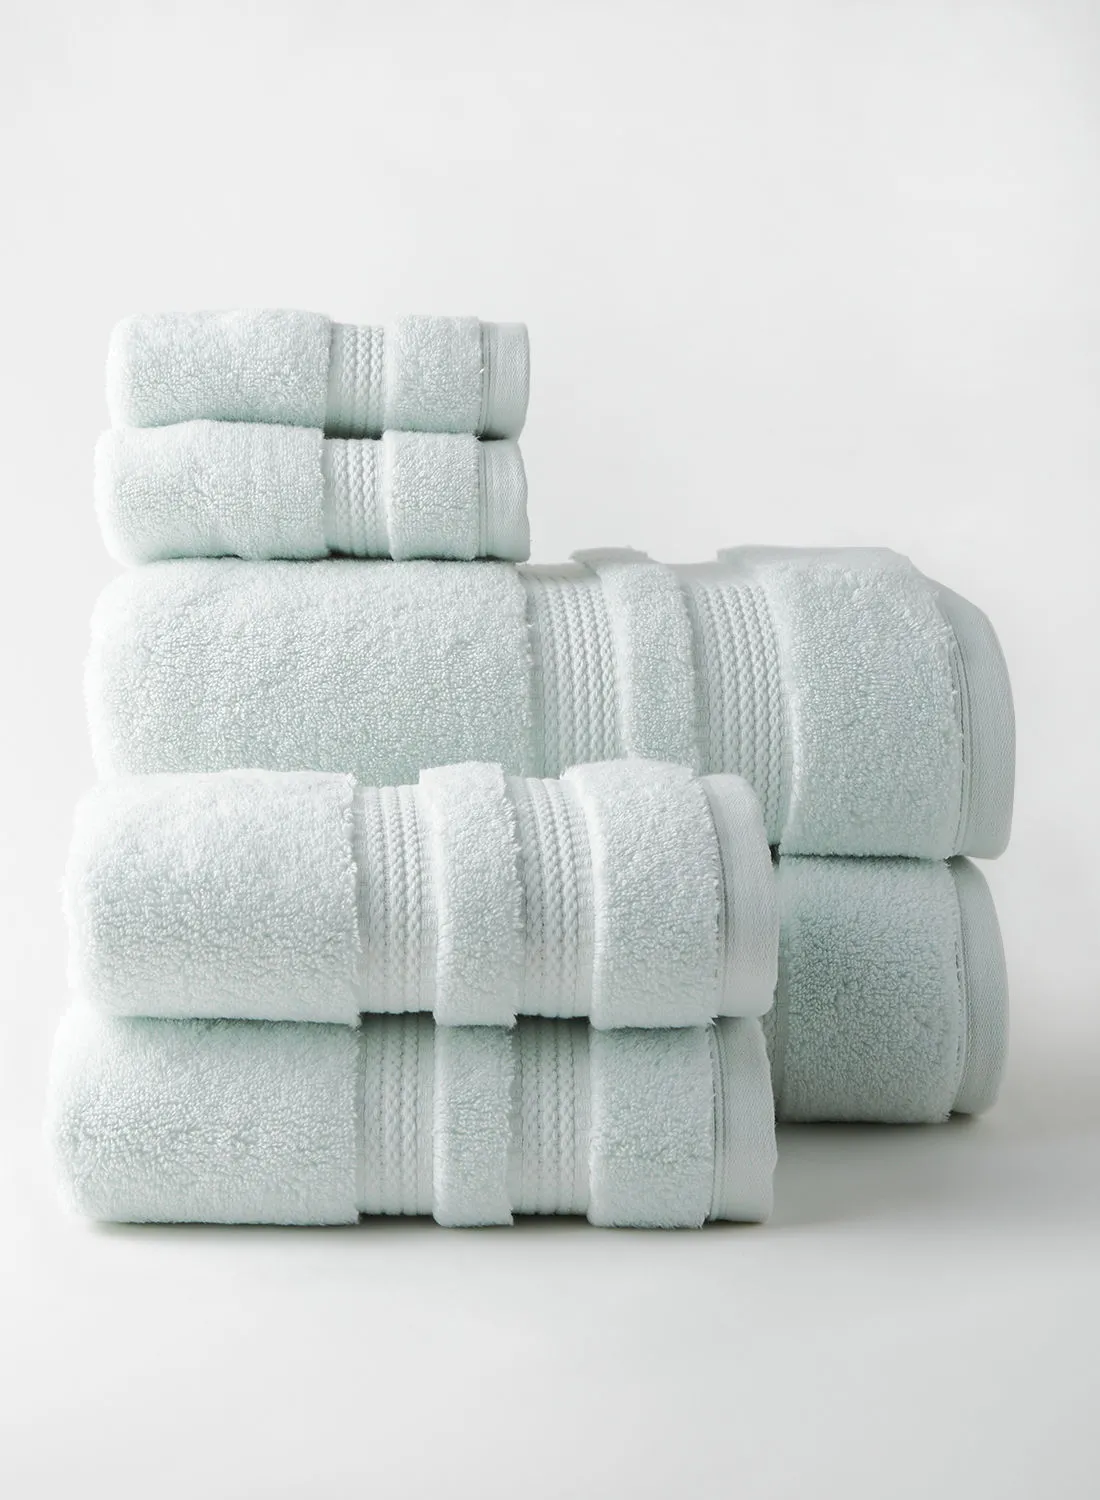 ebb & flow 6 Piece Bathroom Towel Set - 700 GSM - 2 Hand Towel - 2 Face Towel - 2 Bath Towel - Sea Grass Color -Luxury Velvet Feel - Ultra Soft - Quick Dry